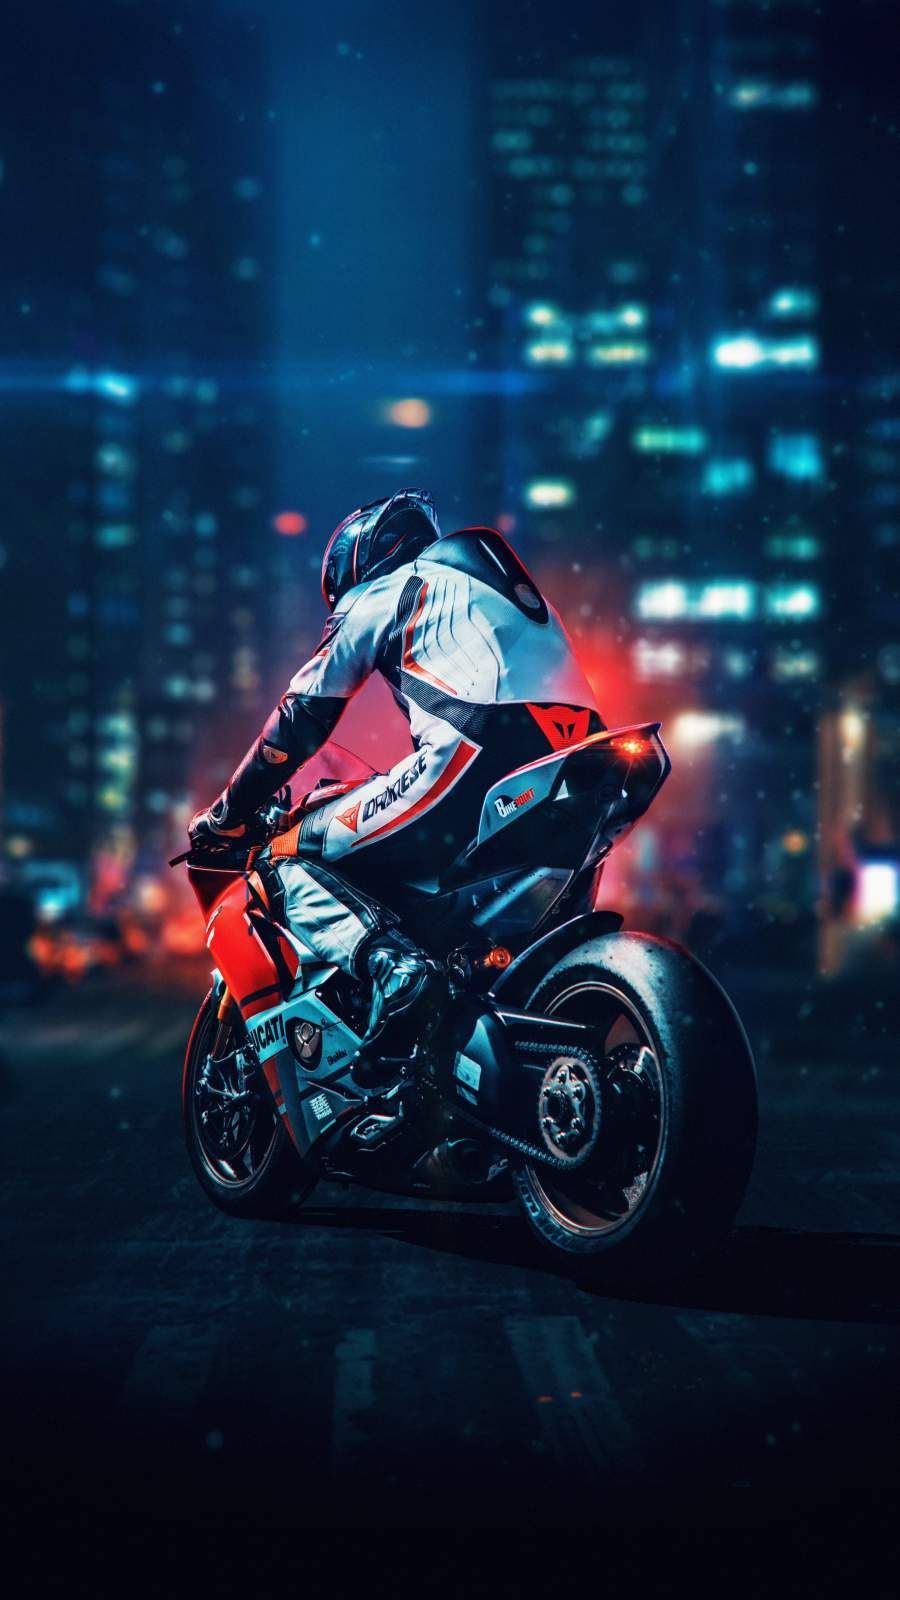 Motorcycle Rider iPhone Wallpaper. Motorcycle, Motorcycle